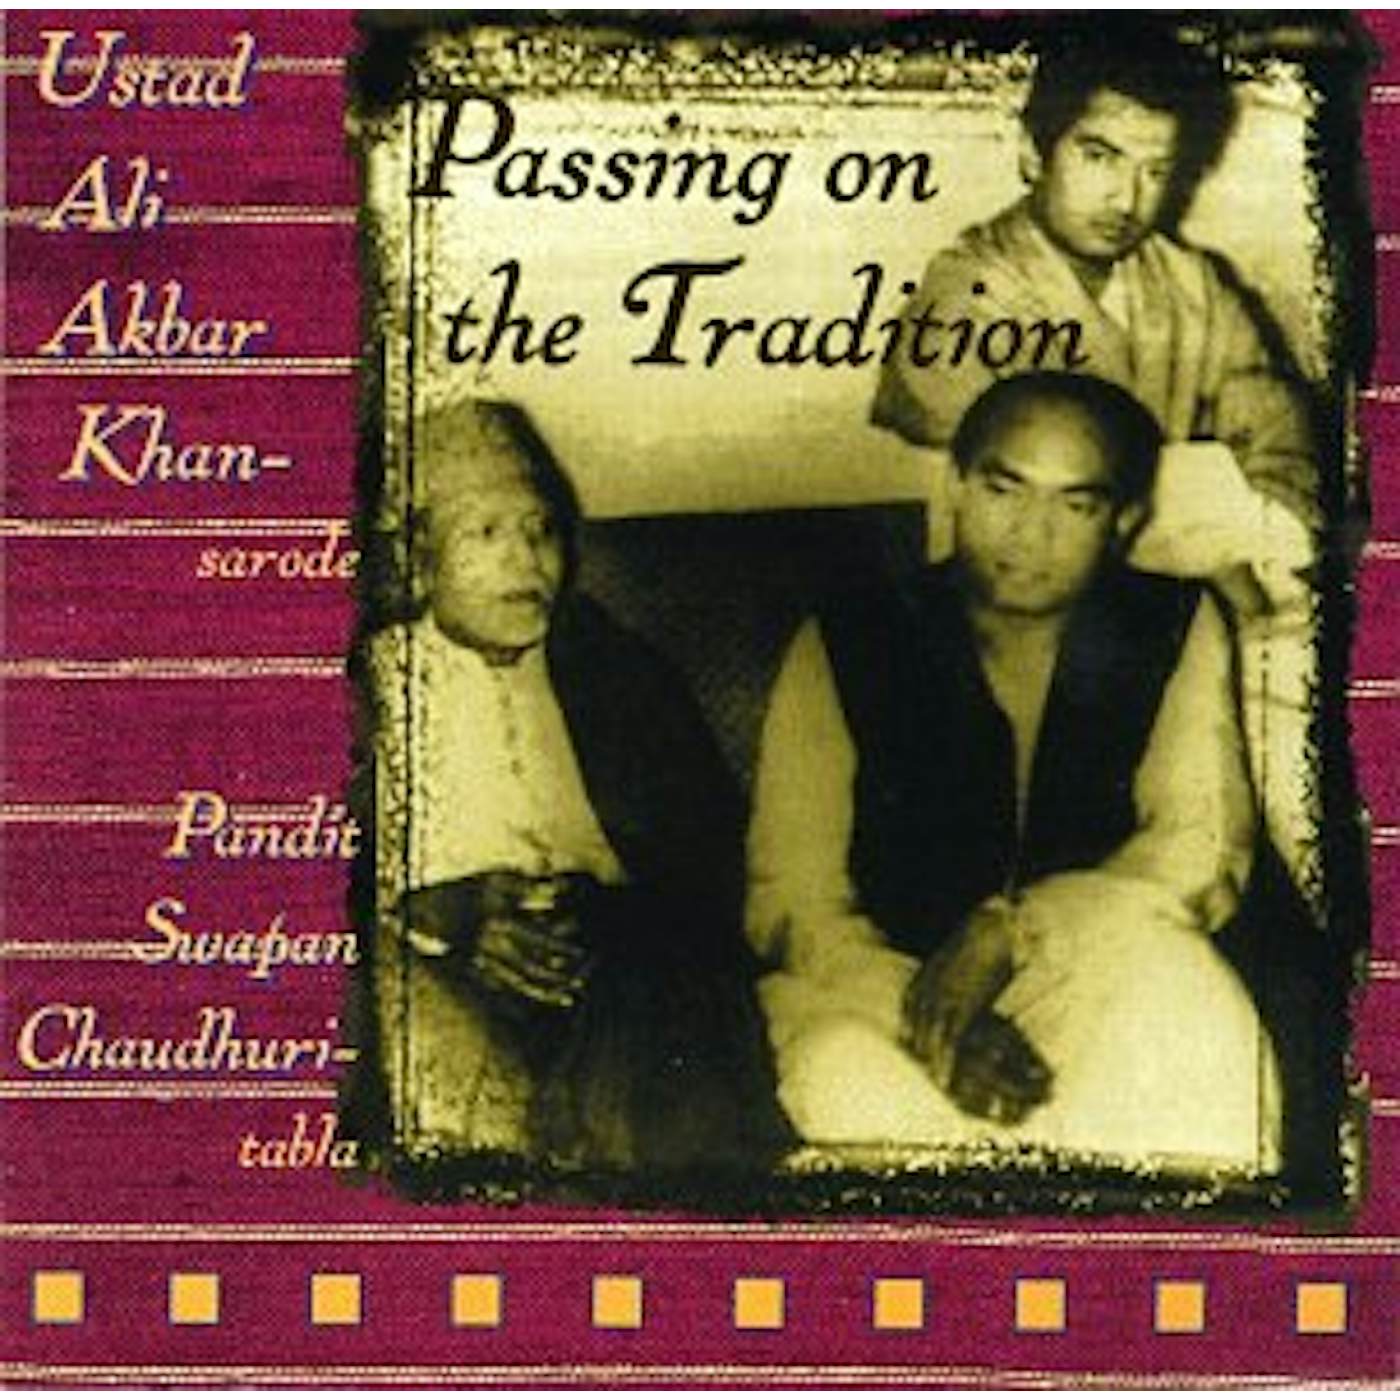 Ali Akbar Khan PASSING ON THE TRADITION CD